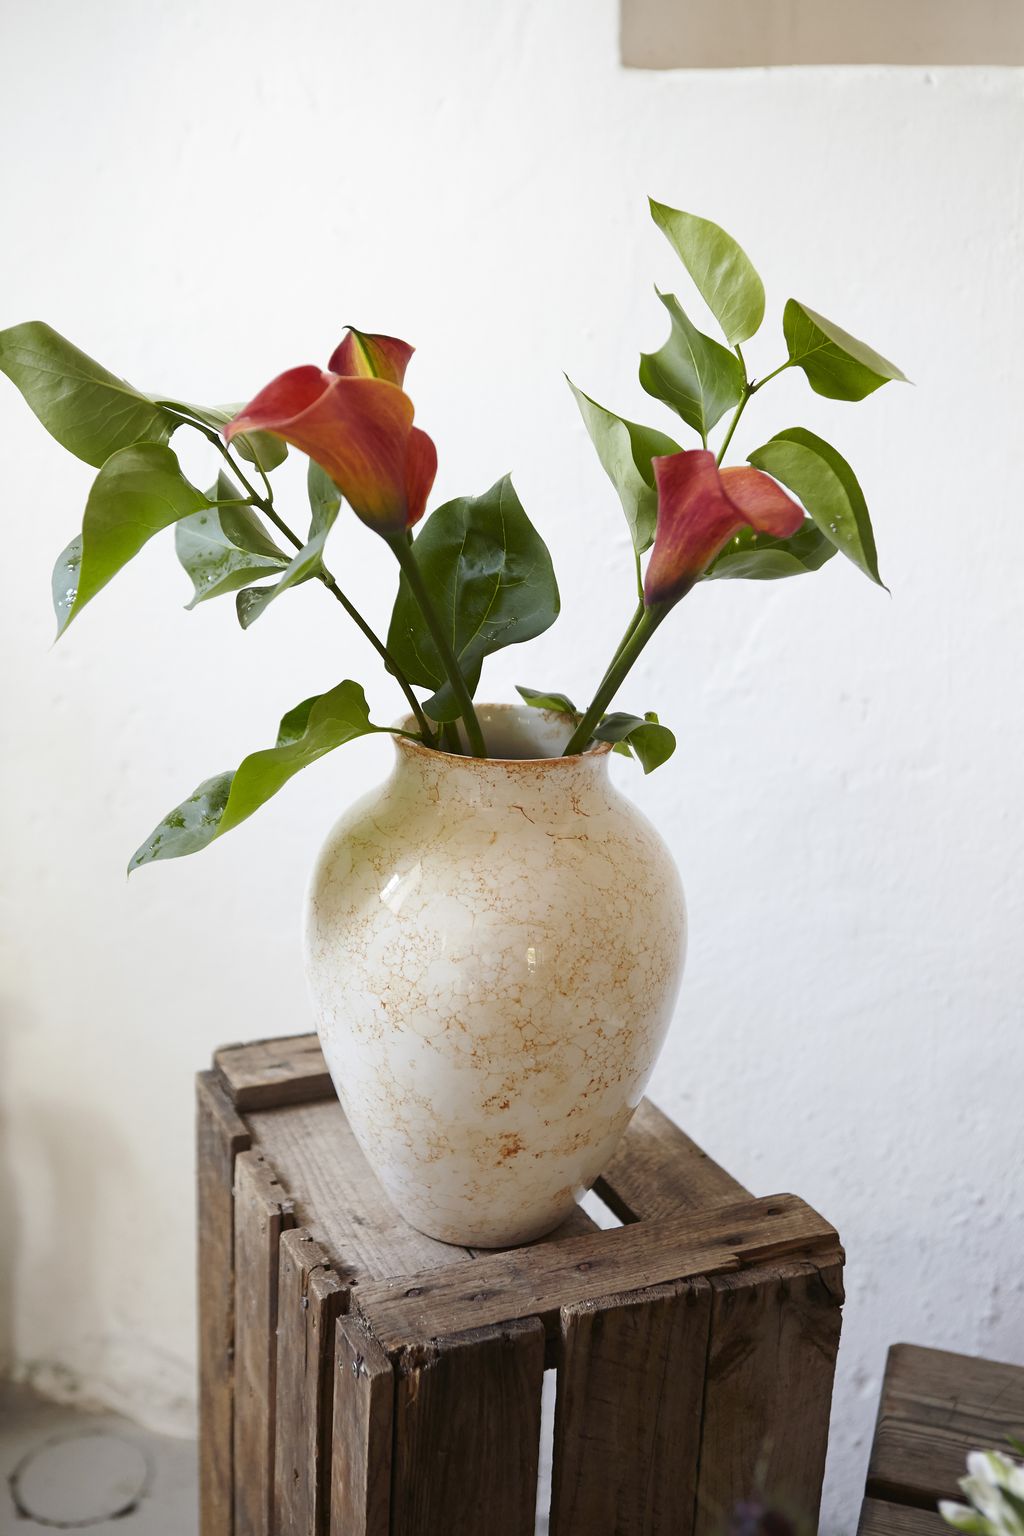 Knabstrup Keramik Vase Natura H 20 Cm, Weiß/Braun